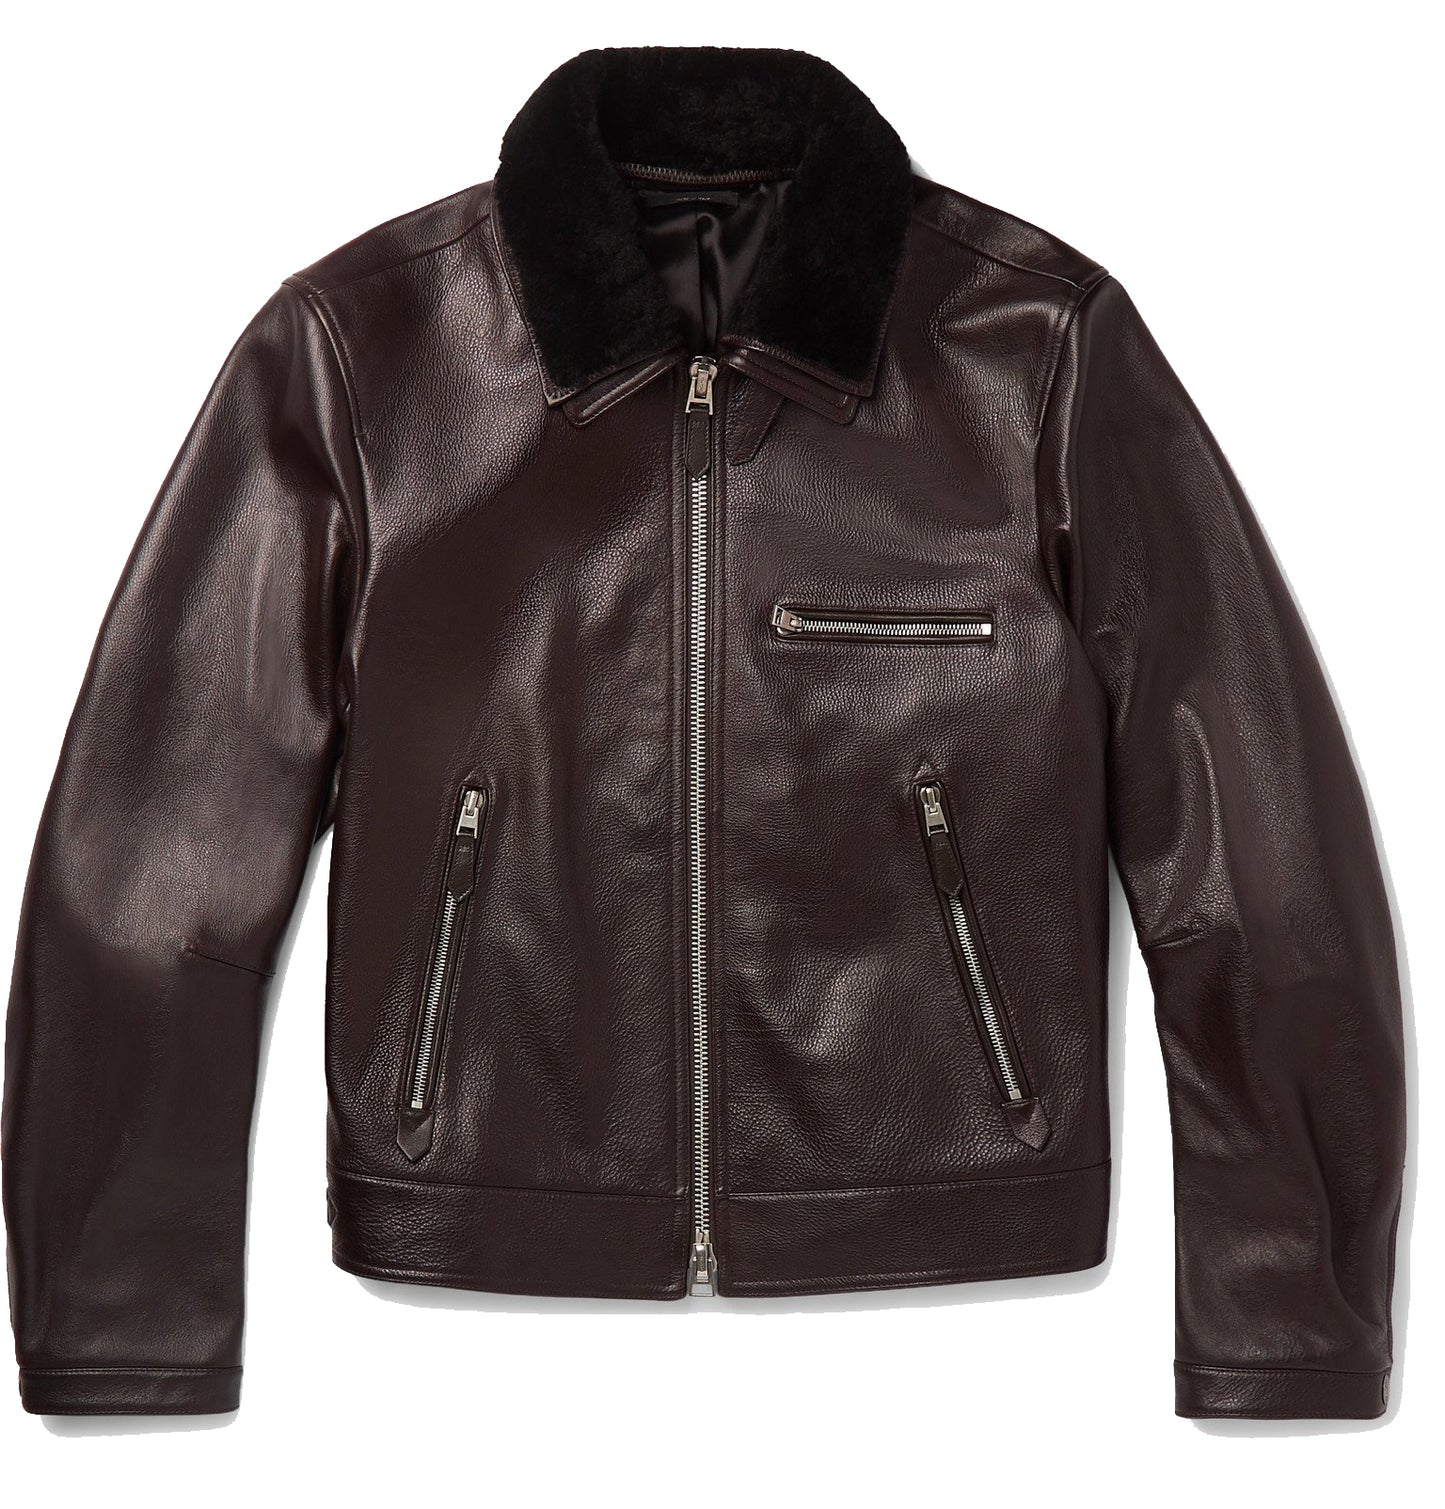 Men's Luxurious Leather Jacket w/ Shearling Collar - Antonio – Tango.